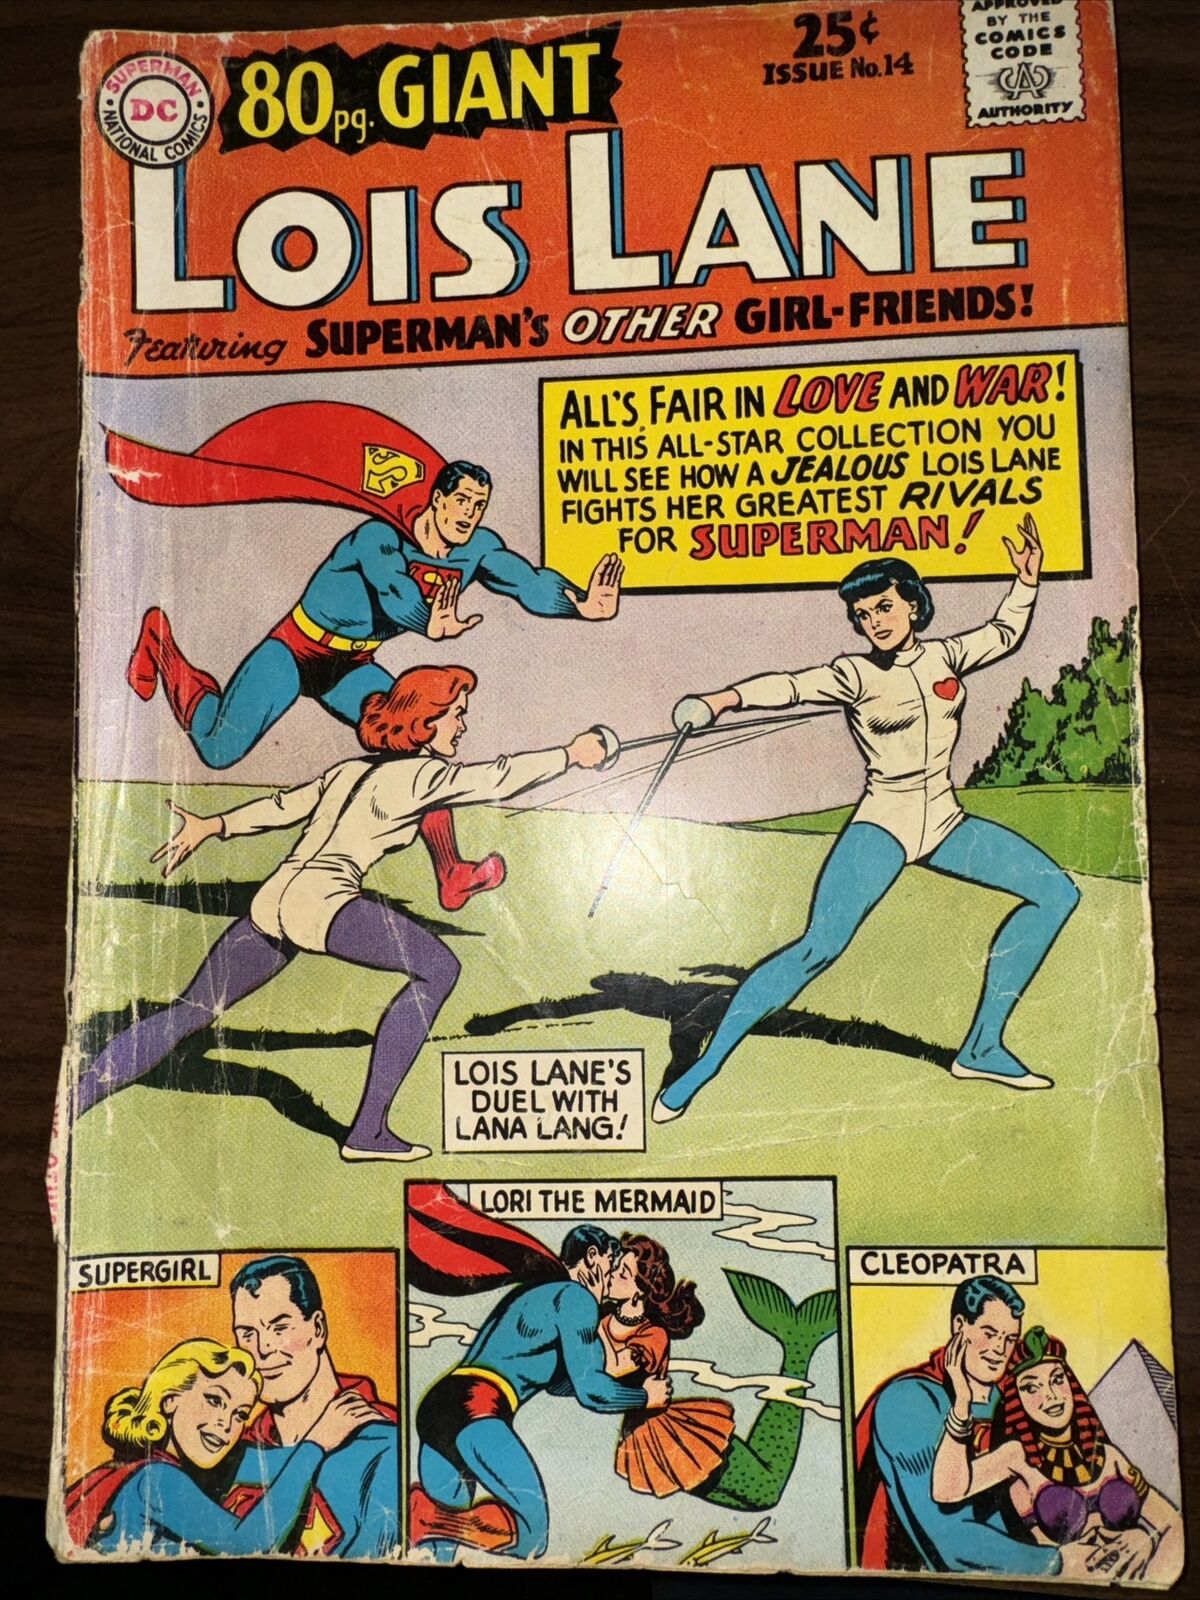 Lois Lane 80 Page Giant #14 1965 DC Comics Superman